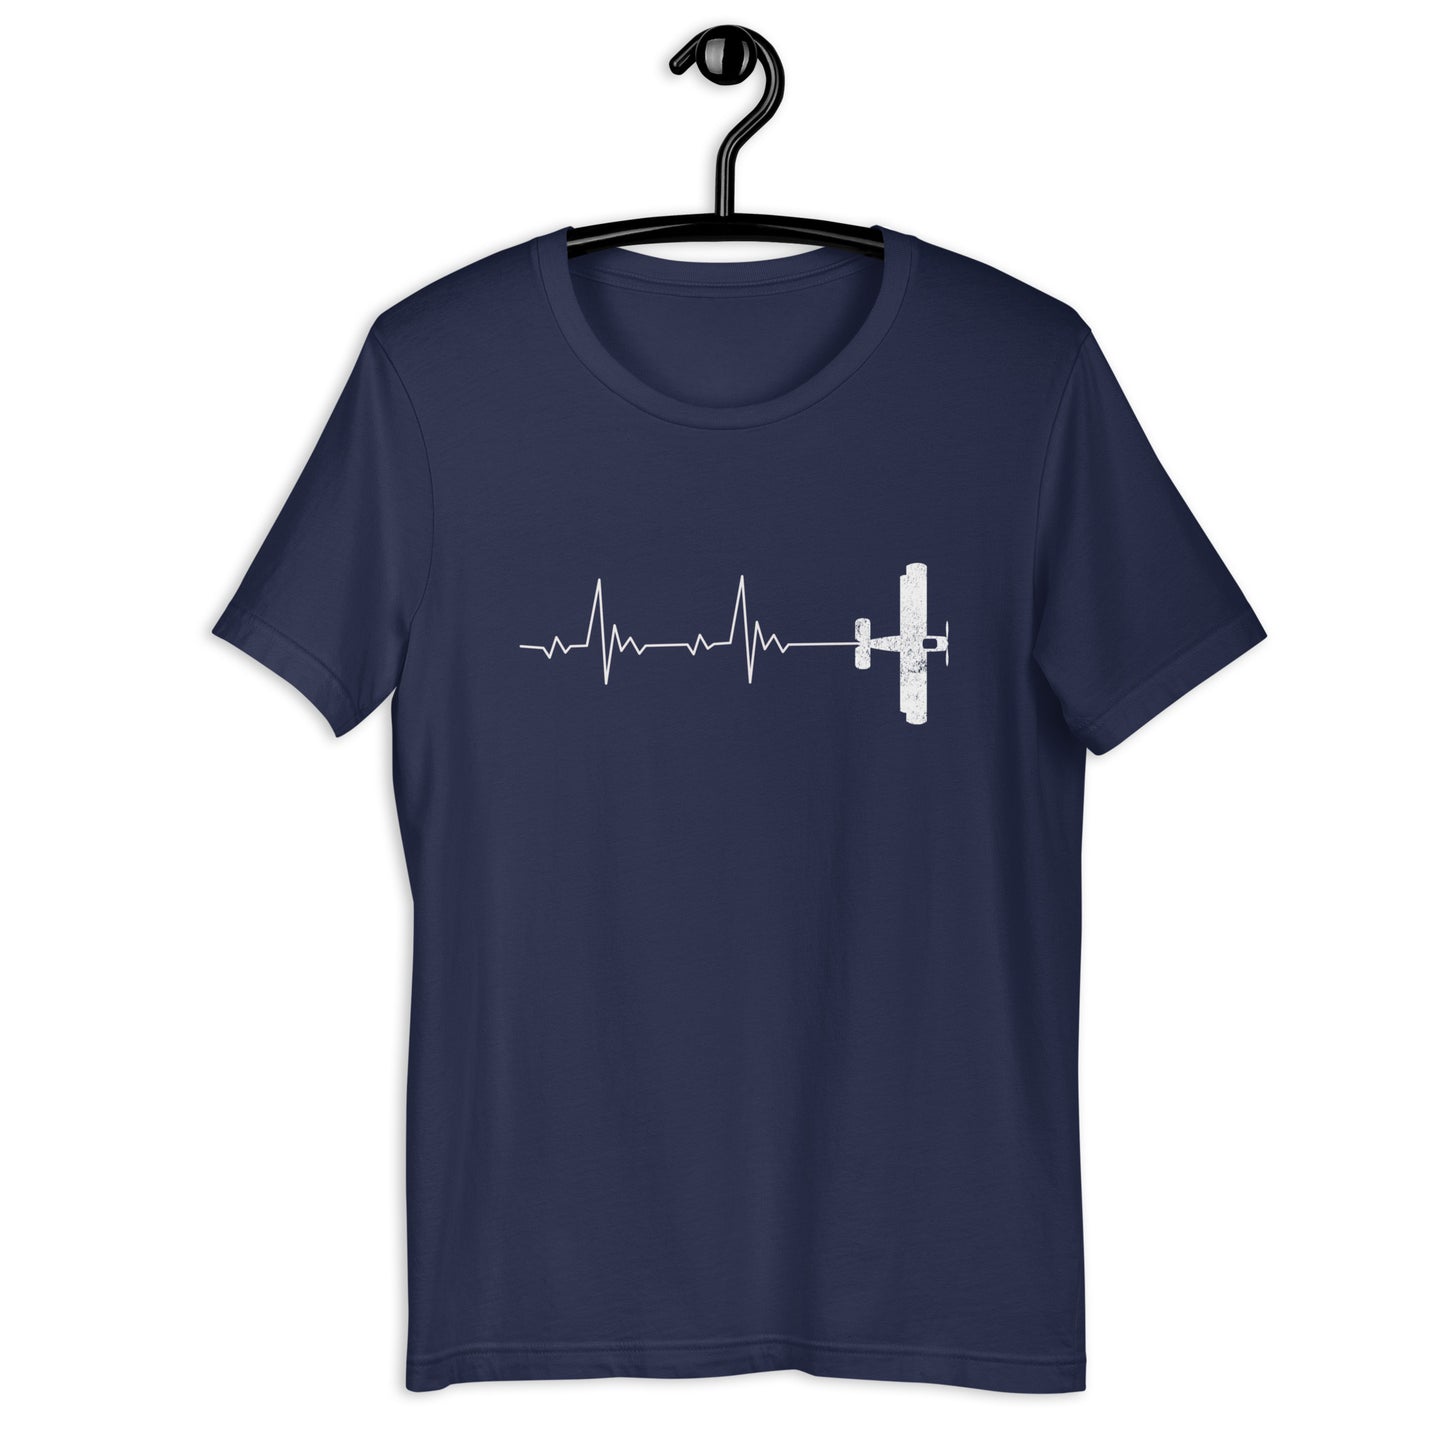 Airplane Heartbeat T-Shirt - The Global Wanderer